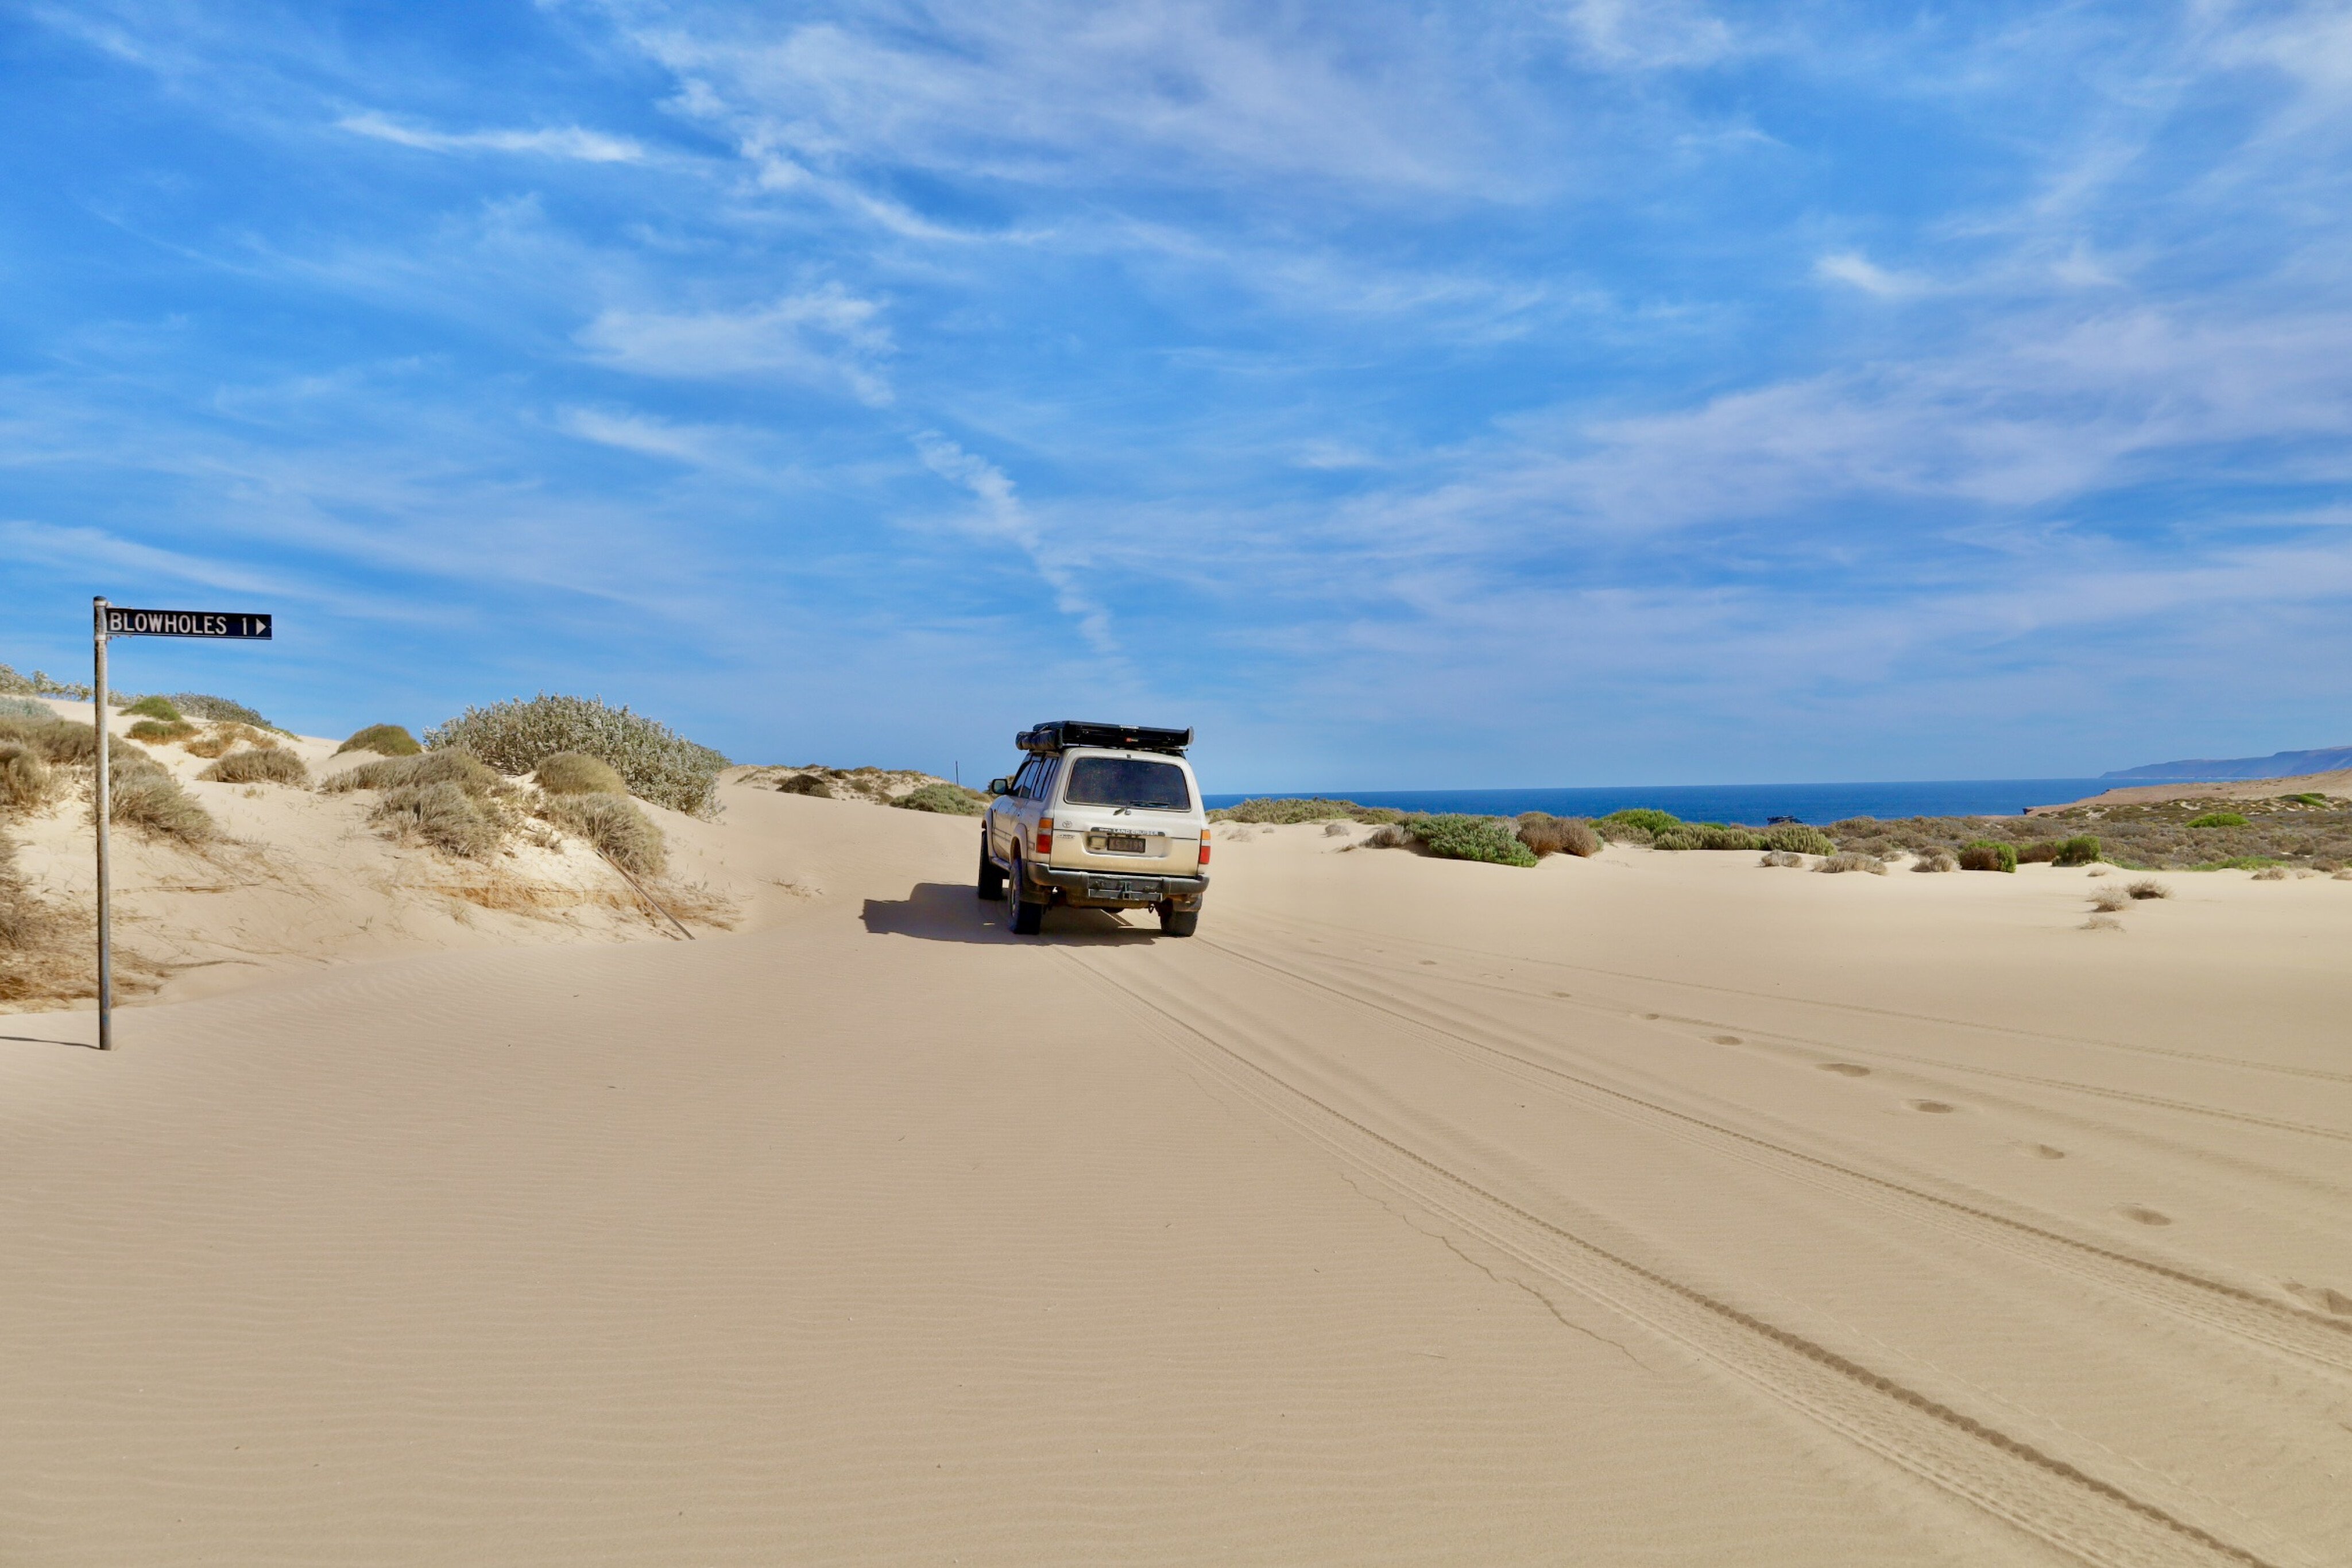 15ec1d59/driving the dunes 4x4 australia dirk hartog island np wa JPG